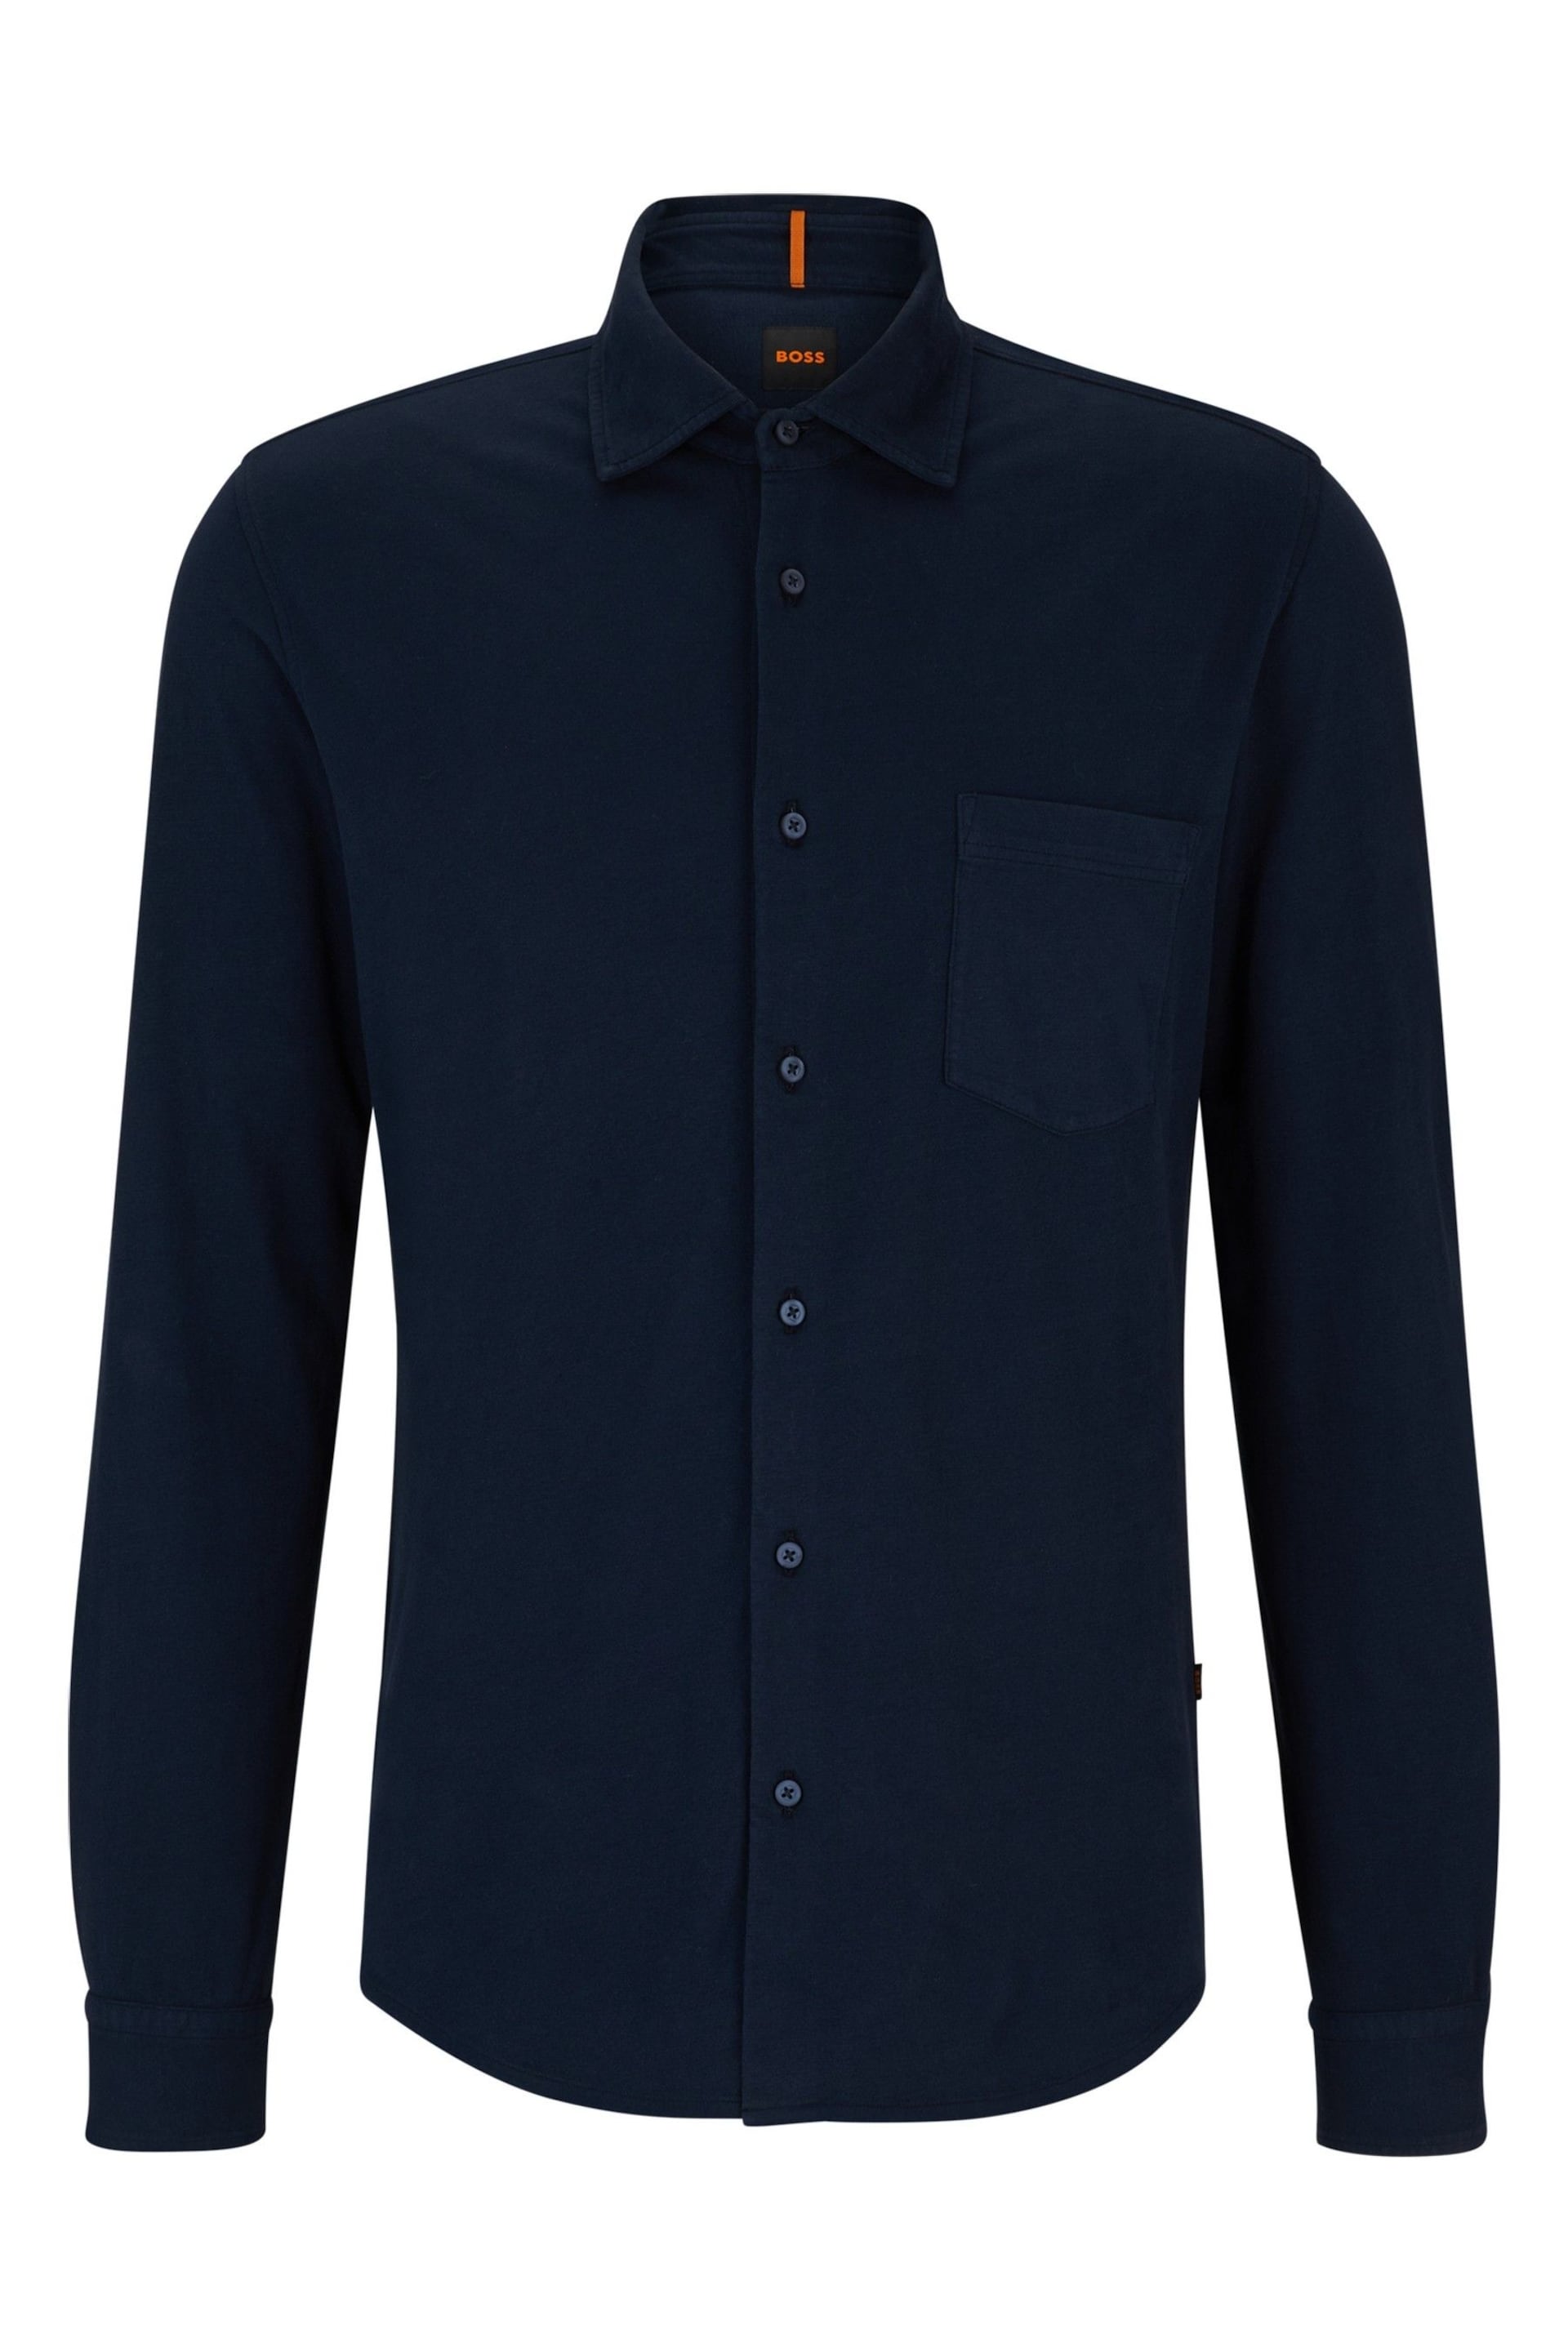 BOSS Dark Blue Garment Dyed Slim Fit Jersey Cotton Long Sleeve Shirt - Image 7 of 7